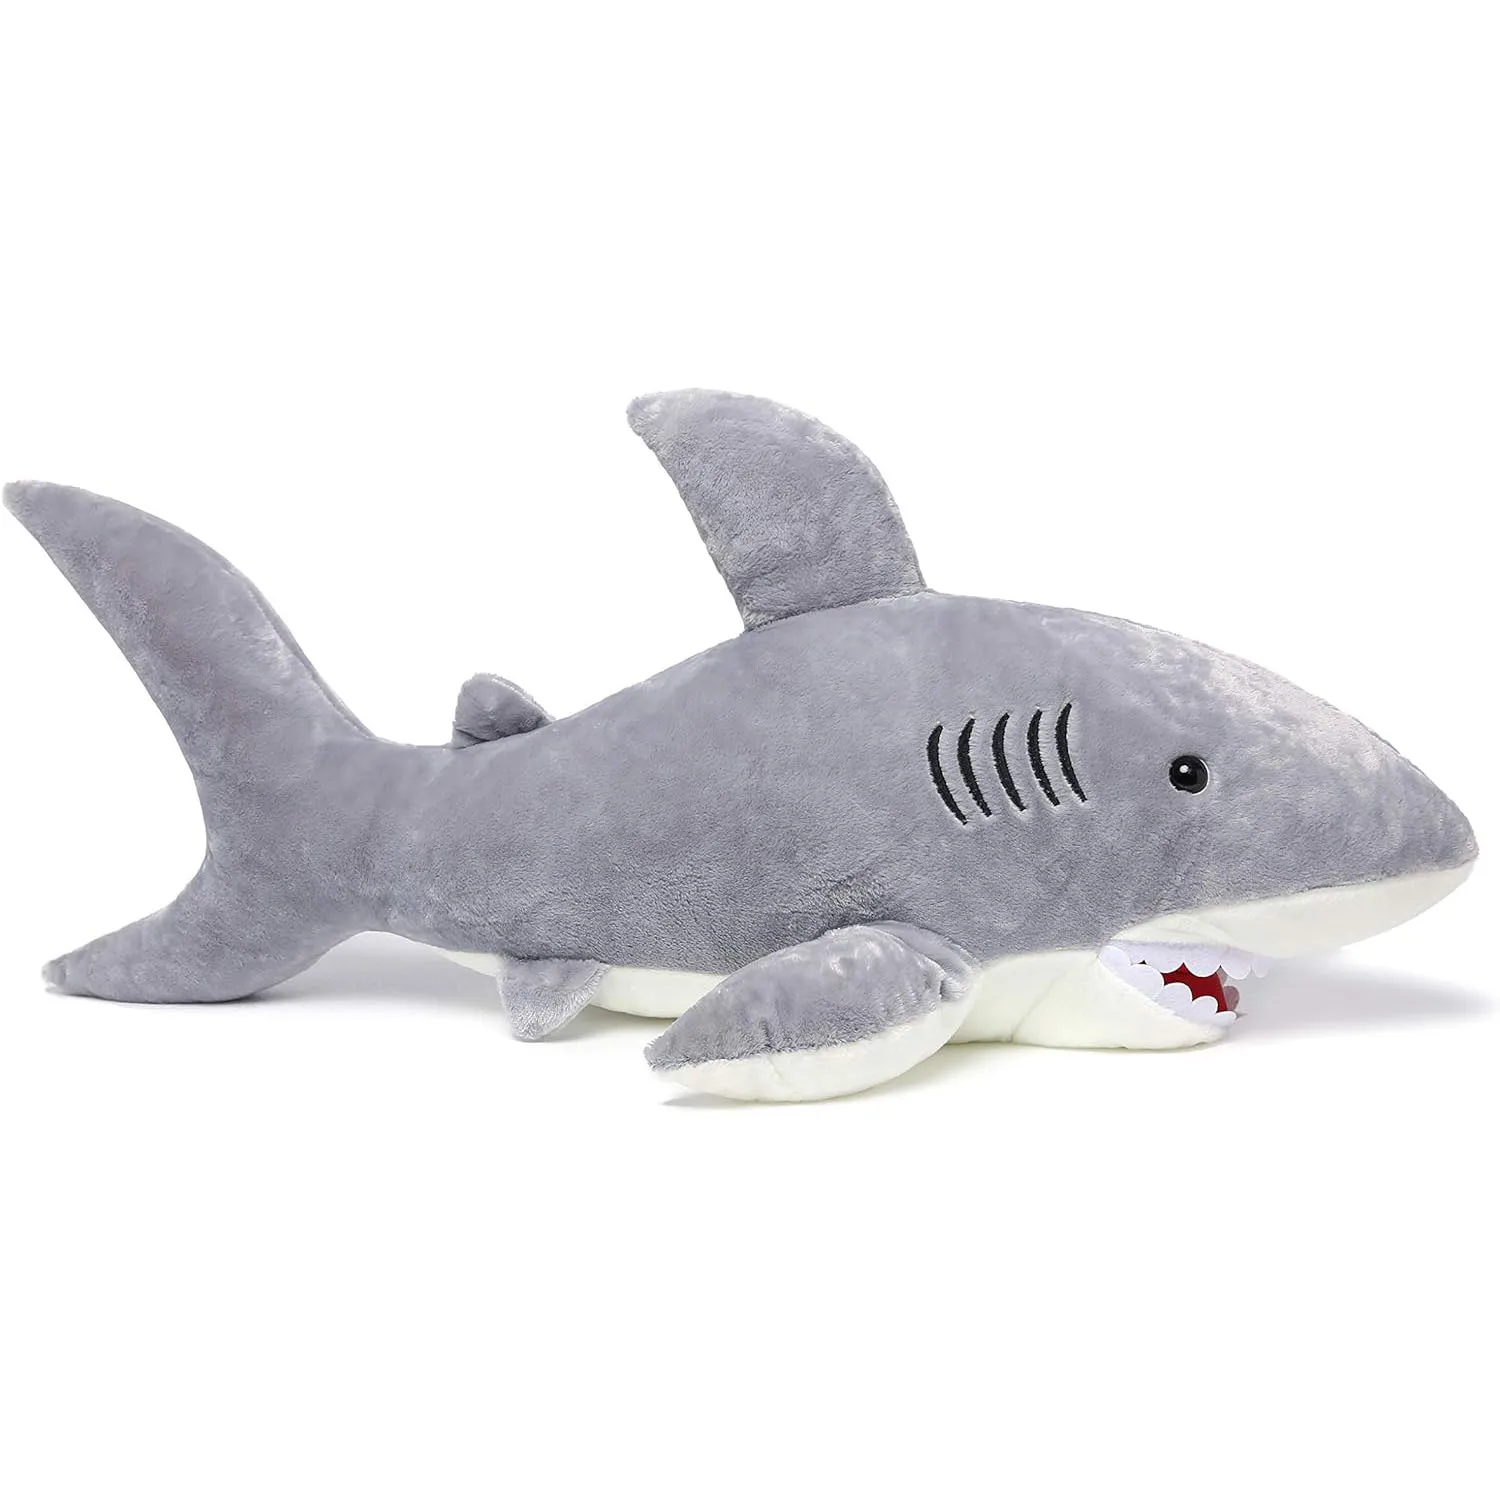 

50-130cm Giant Shark Plush Toy Soft Stuffed Animal Shark Pillow Cute Ocean Animal Plush Pillow Doll Toy Gift for Kids Girlfriend